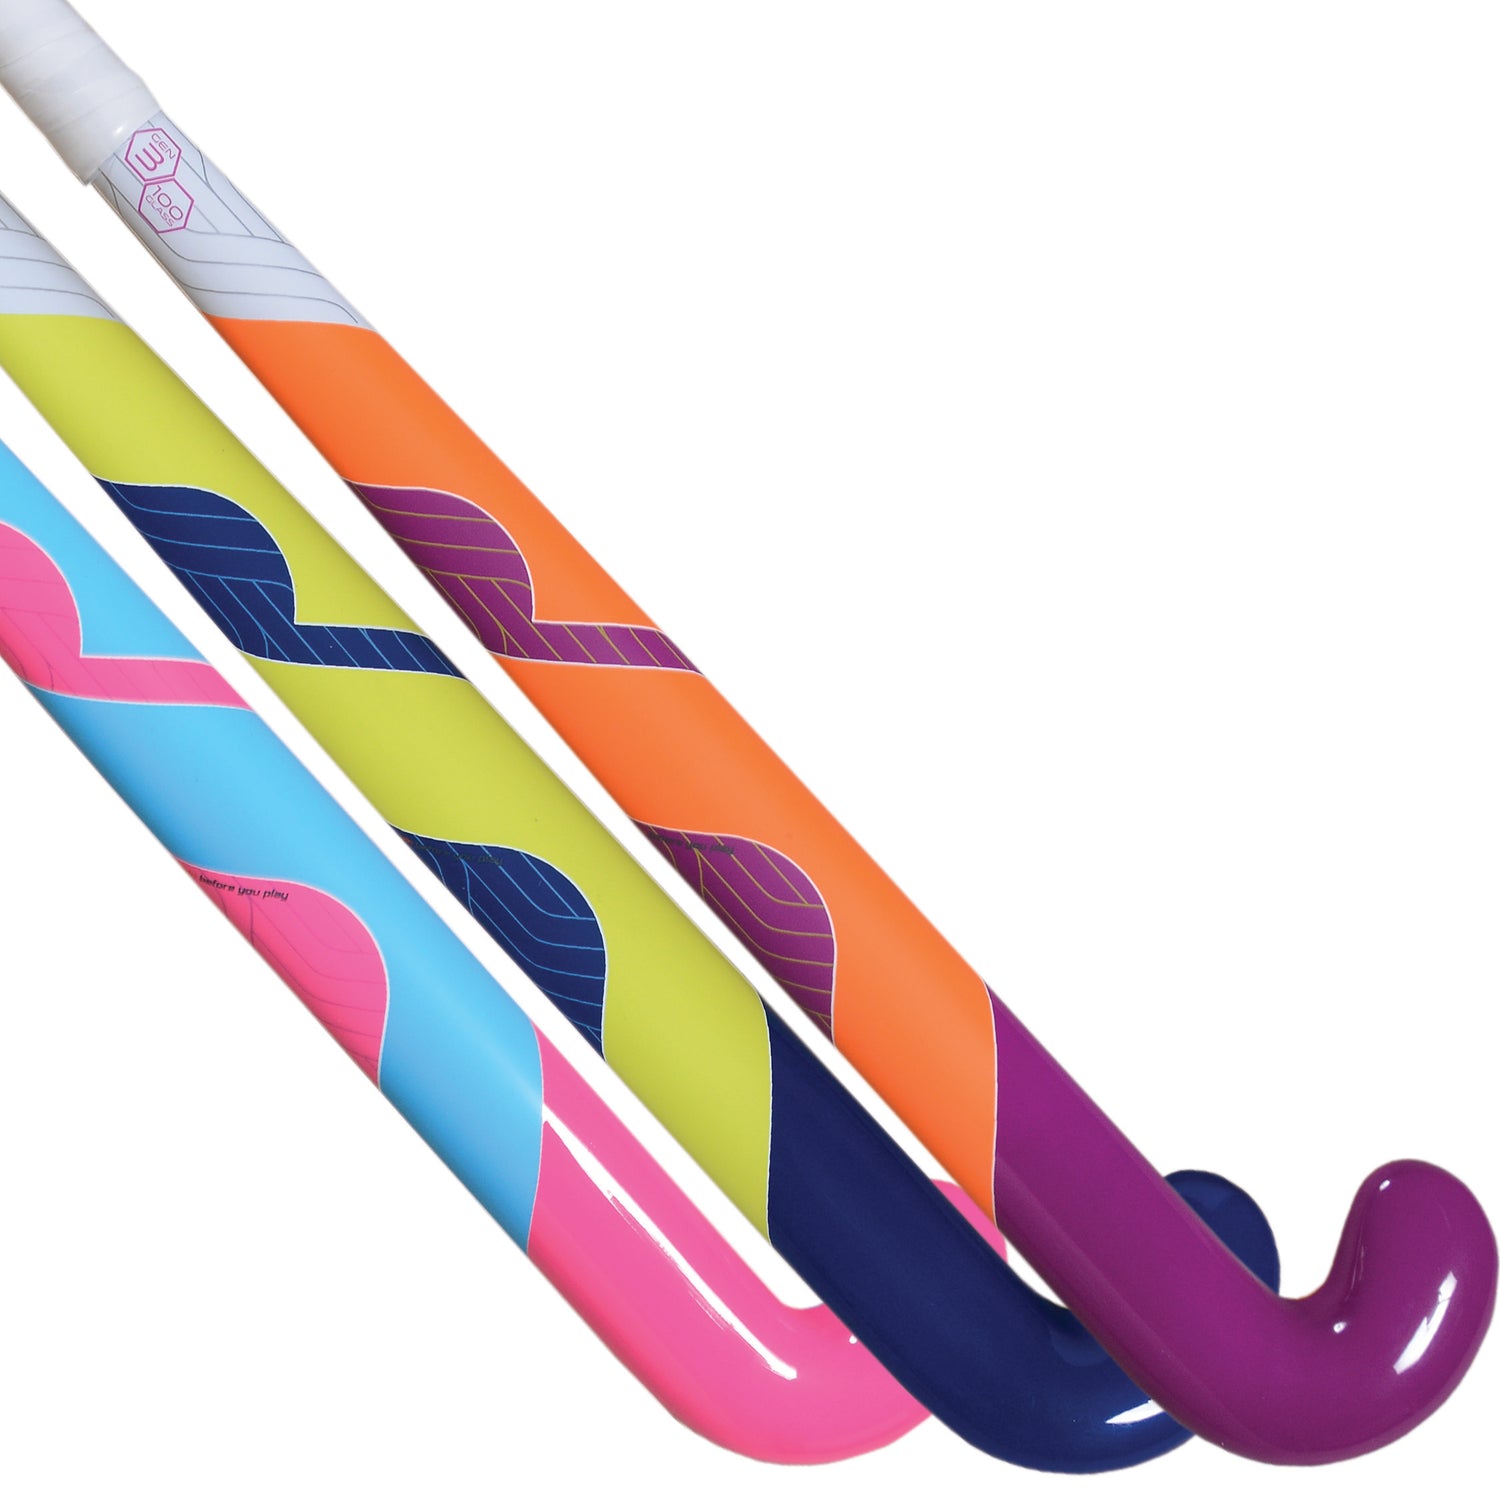 Mercian Genesis 0.3 Hockey Stick